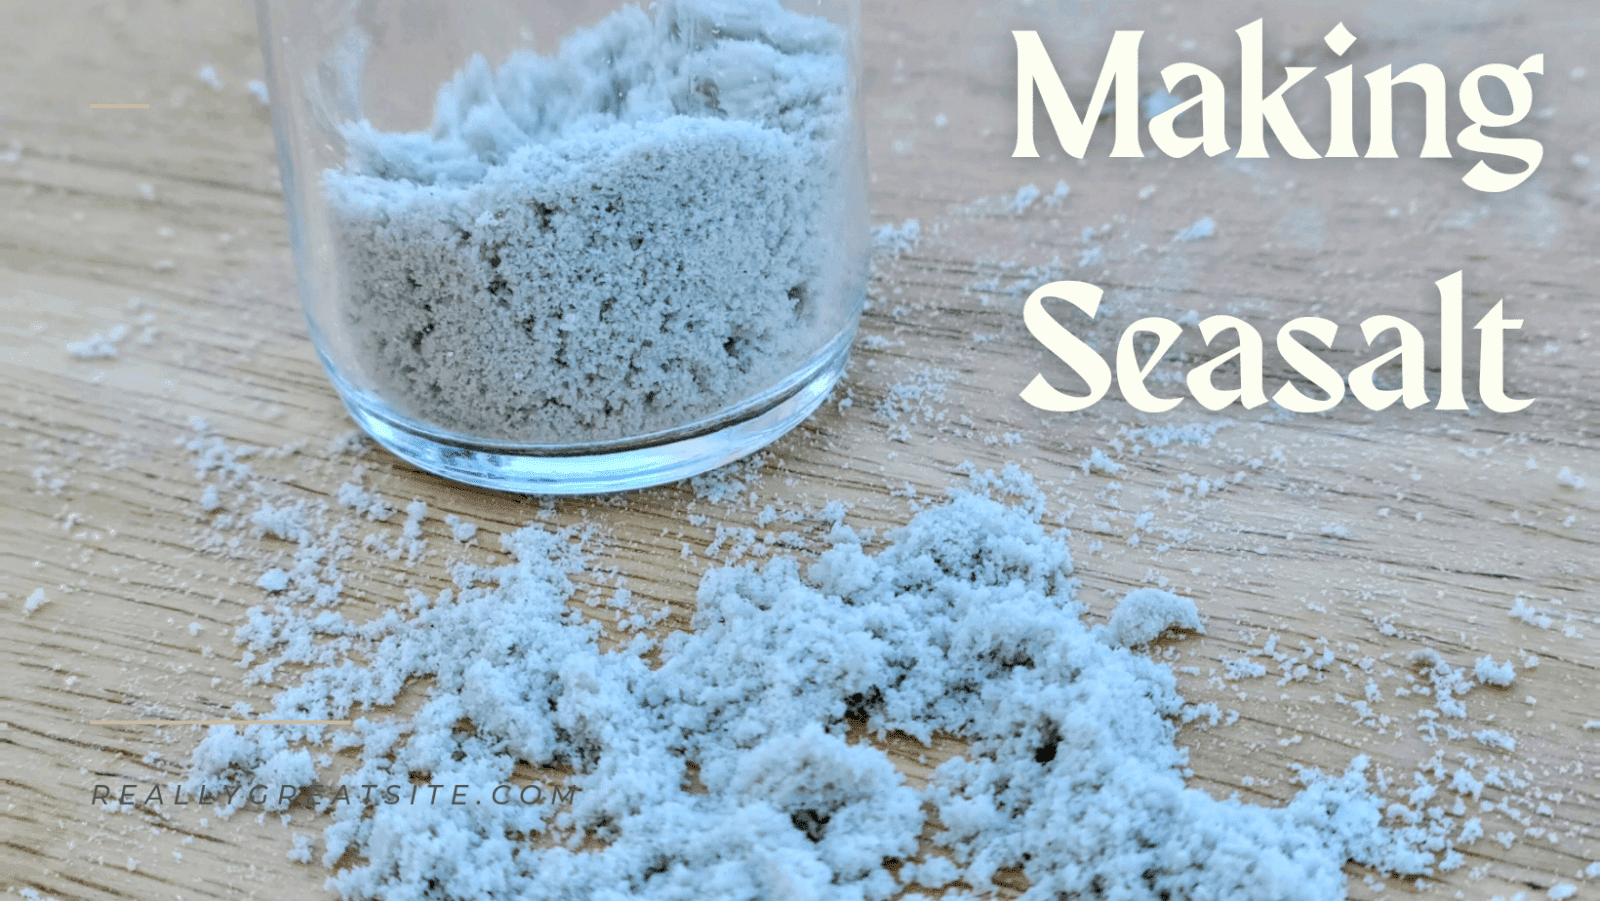 A glass of sea salt on the ground